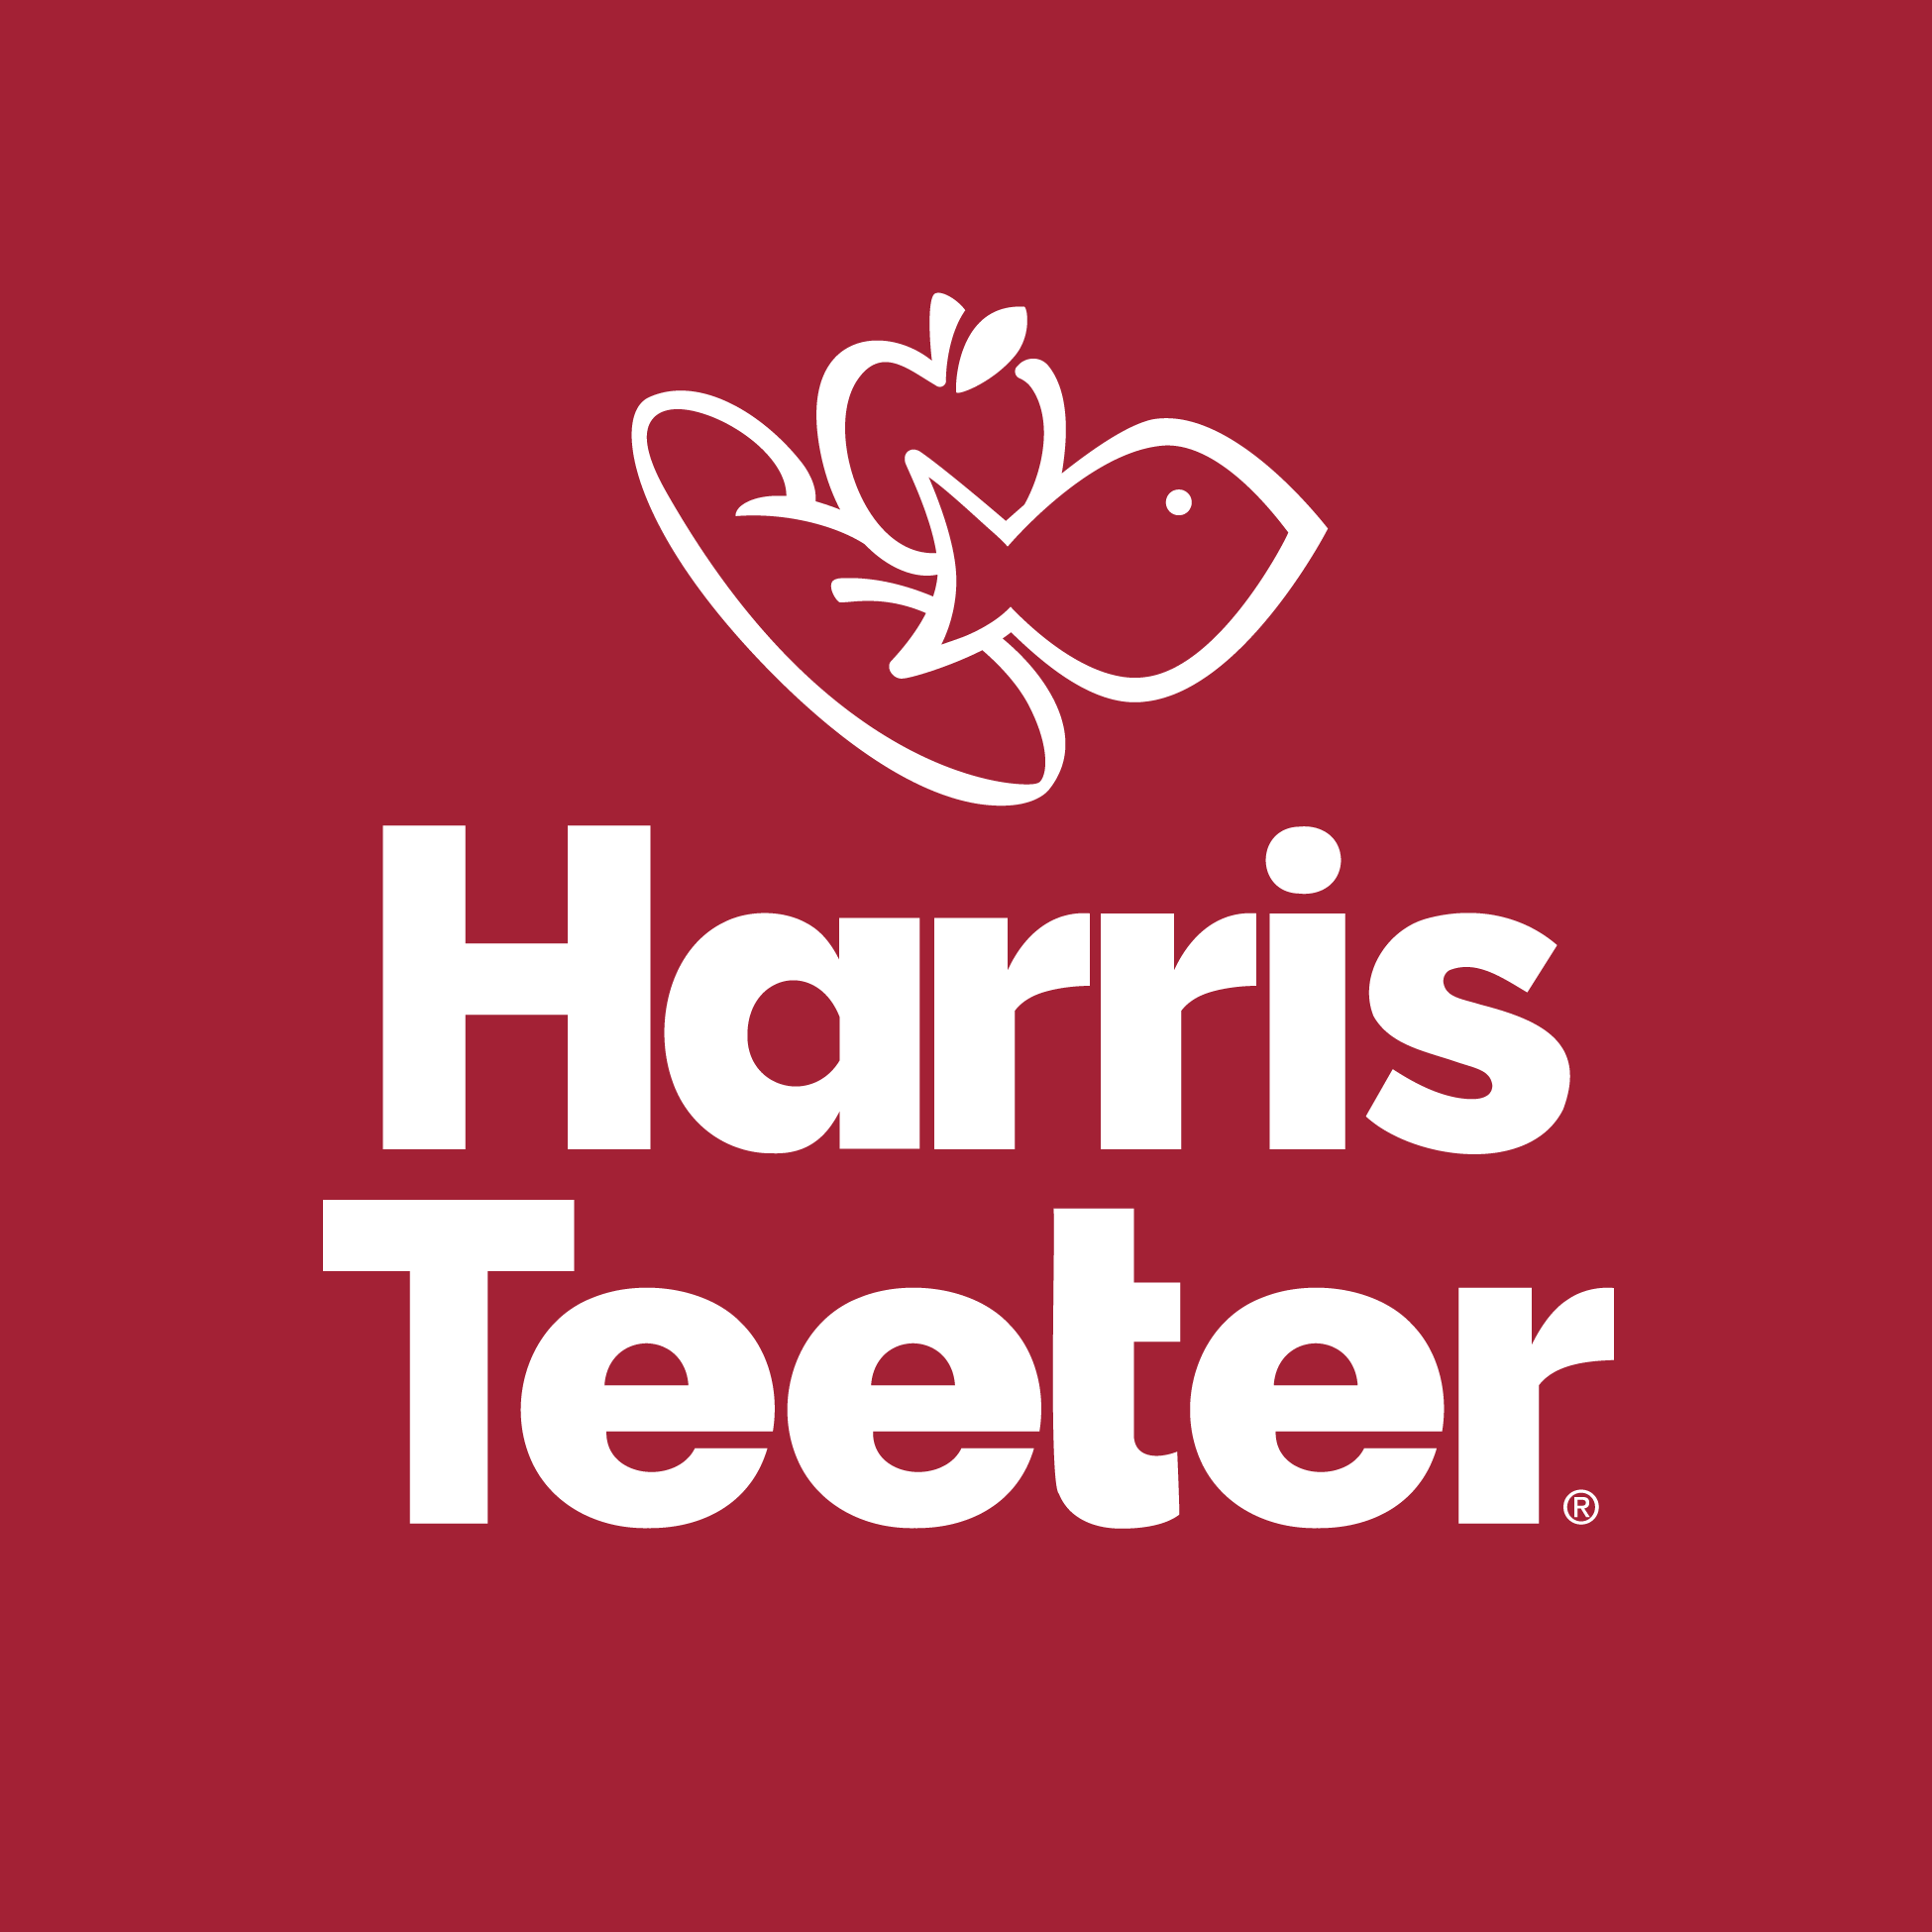 Harris Teeter brand logo